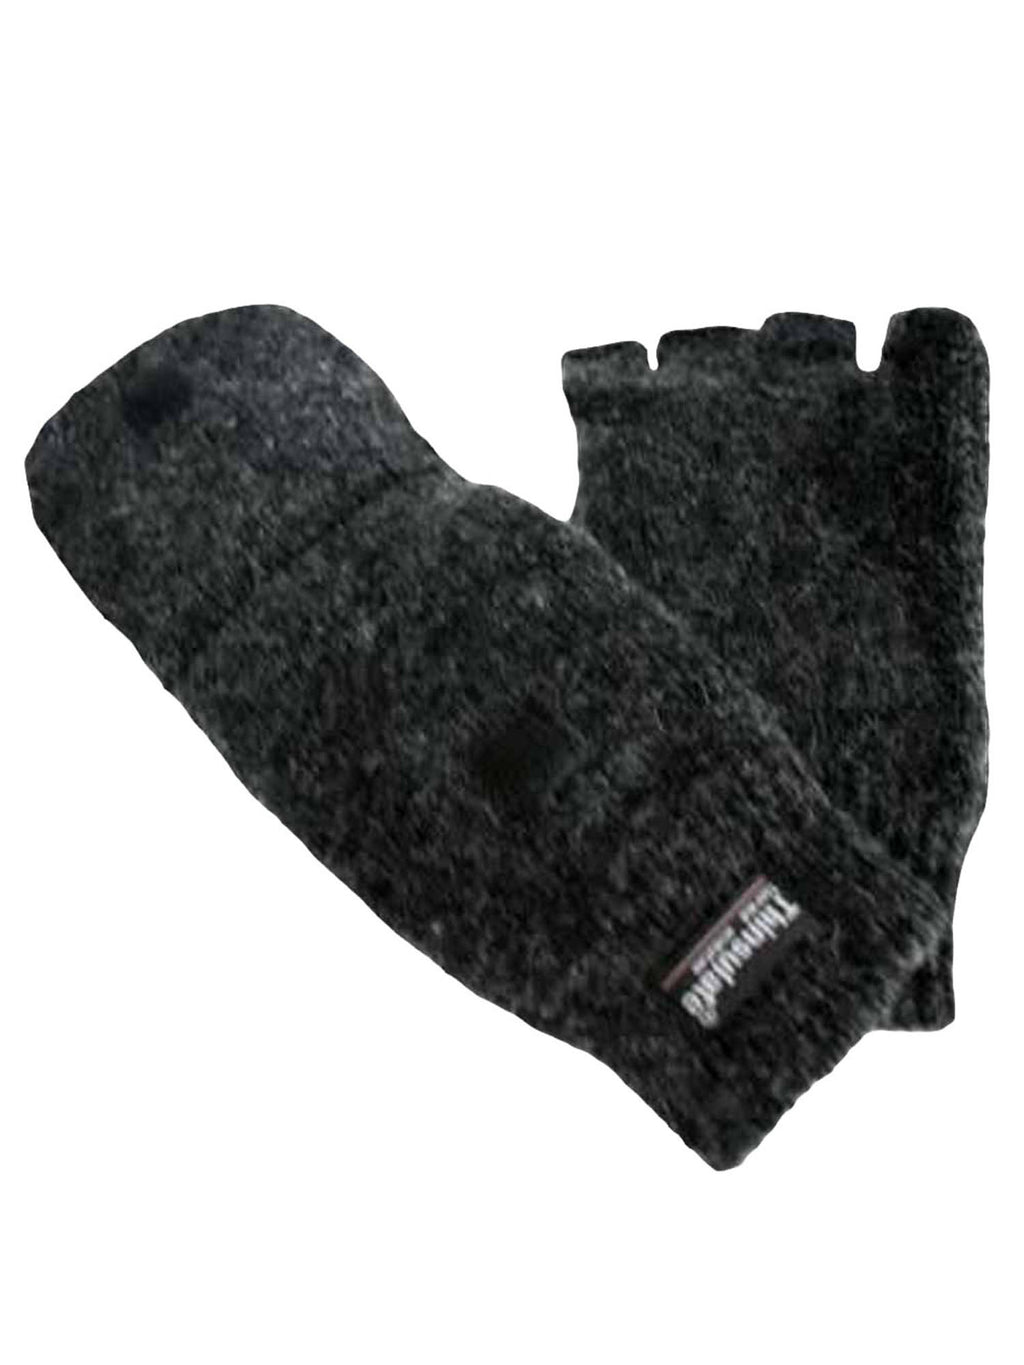 Mens Rag Wool Fingerless Convertible Gloves